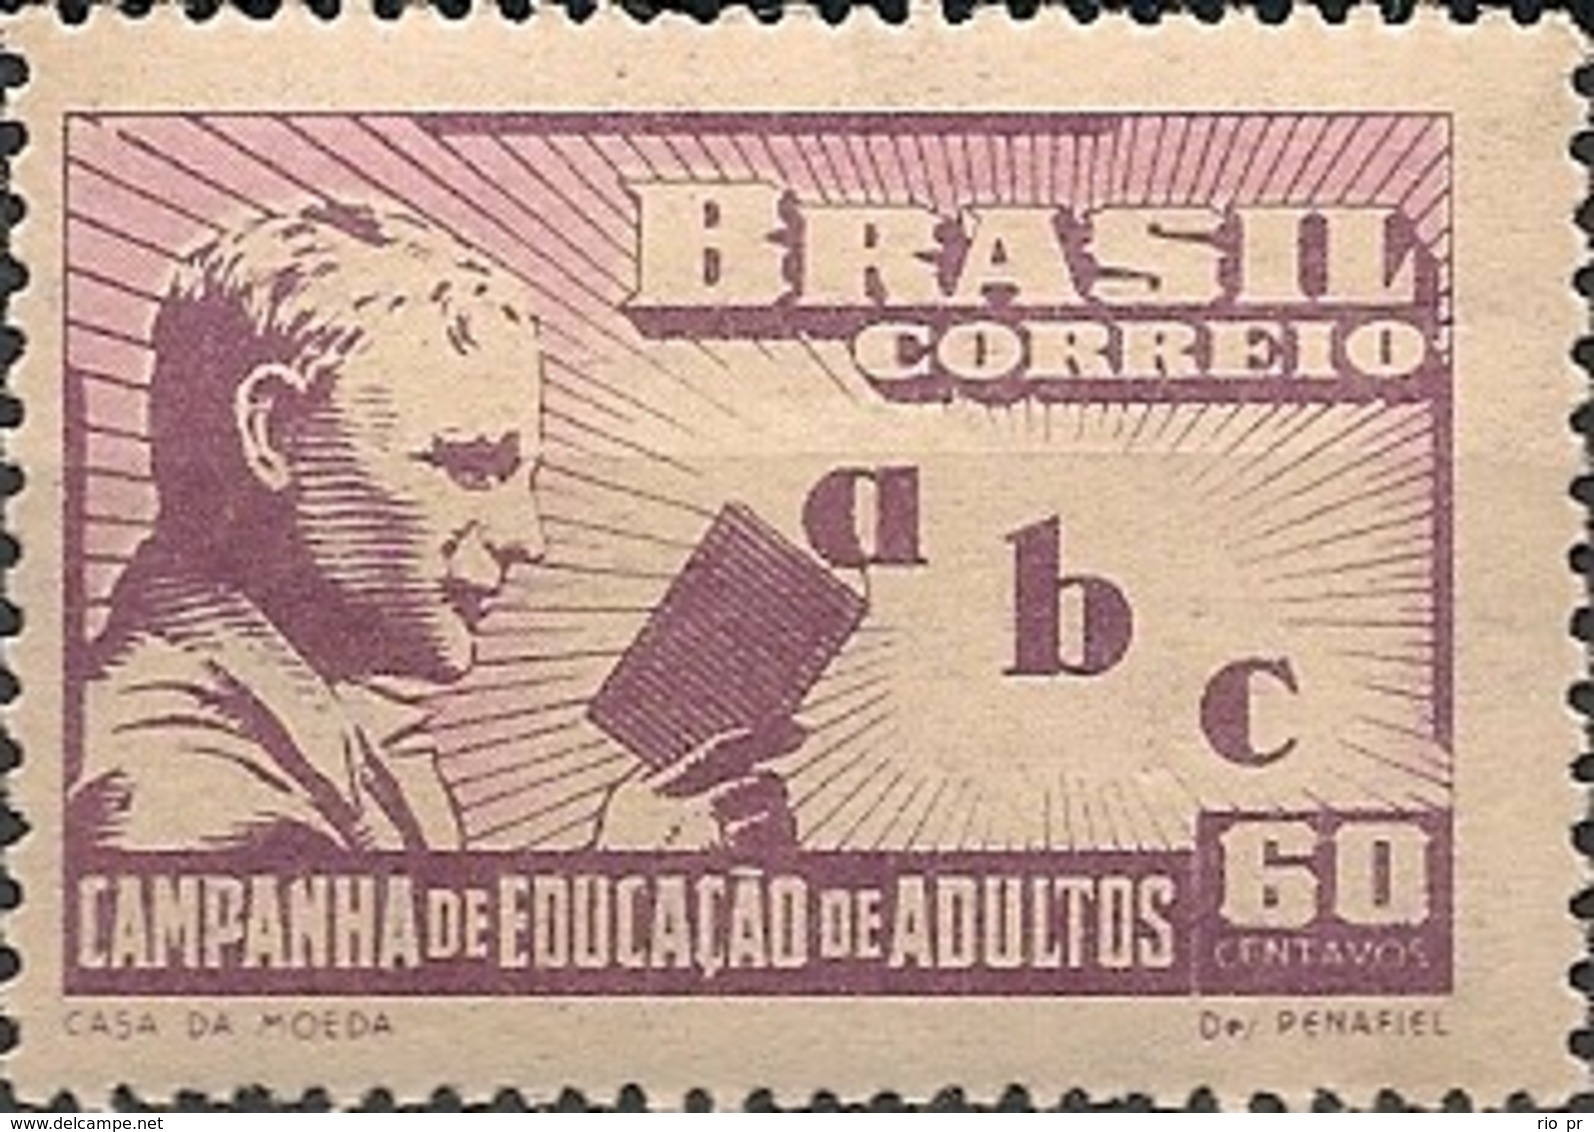 BRAZIL - CAMPAIGN FOR ADULT EDUCATION 1949 - MNH - Ongebruikt